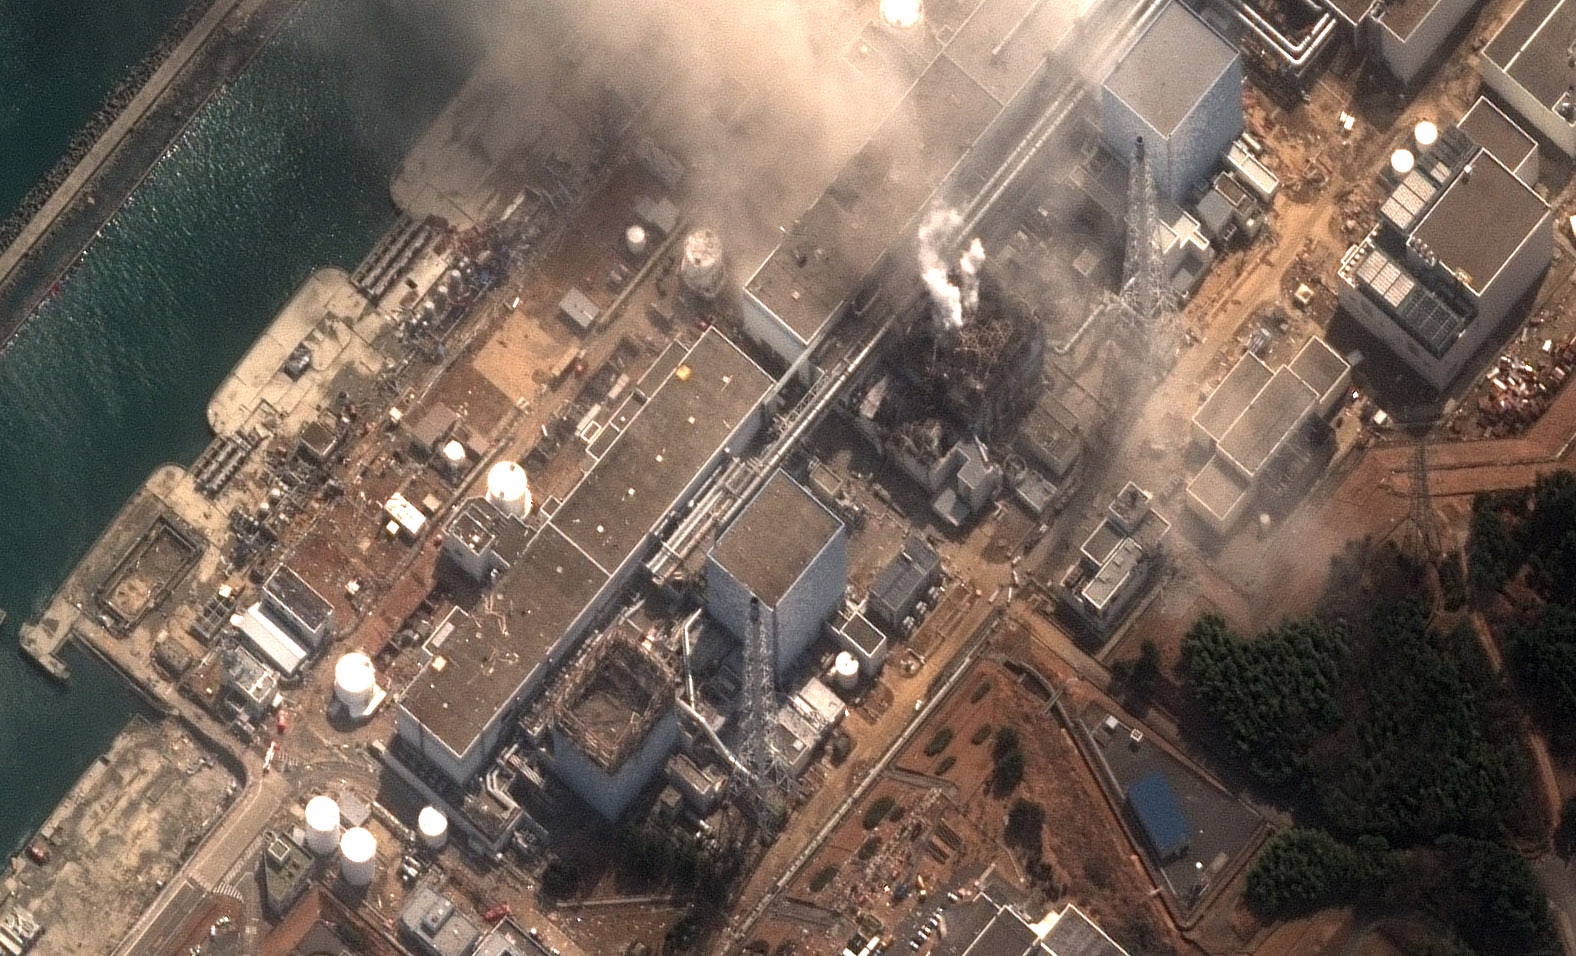 https://lh6.googleusercontent.com/-rrB-tNbUgIk/TX5ELCR_aSI/AAAAAAAAFQI/CJdTpLObyVs/s1600/fukushima_after_explosions.jpg